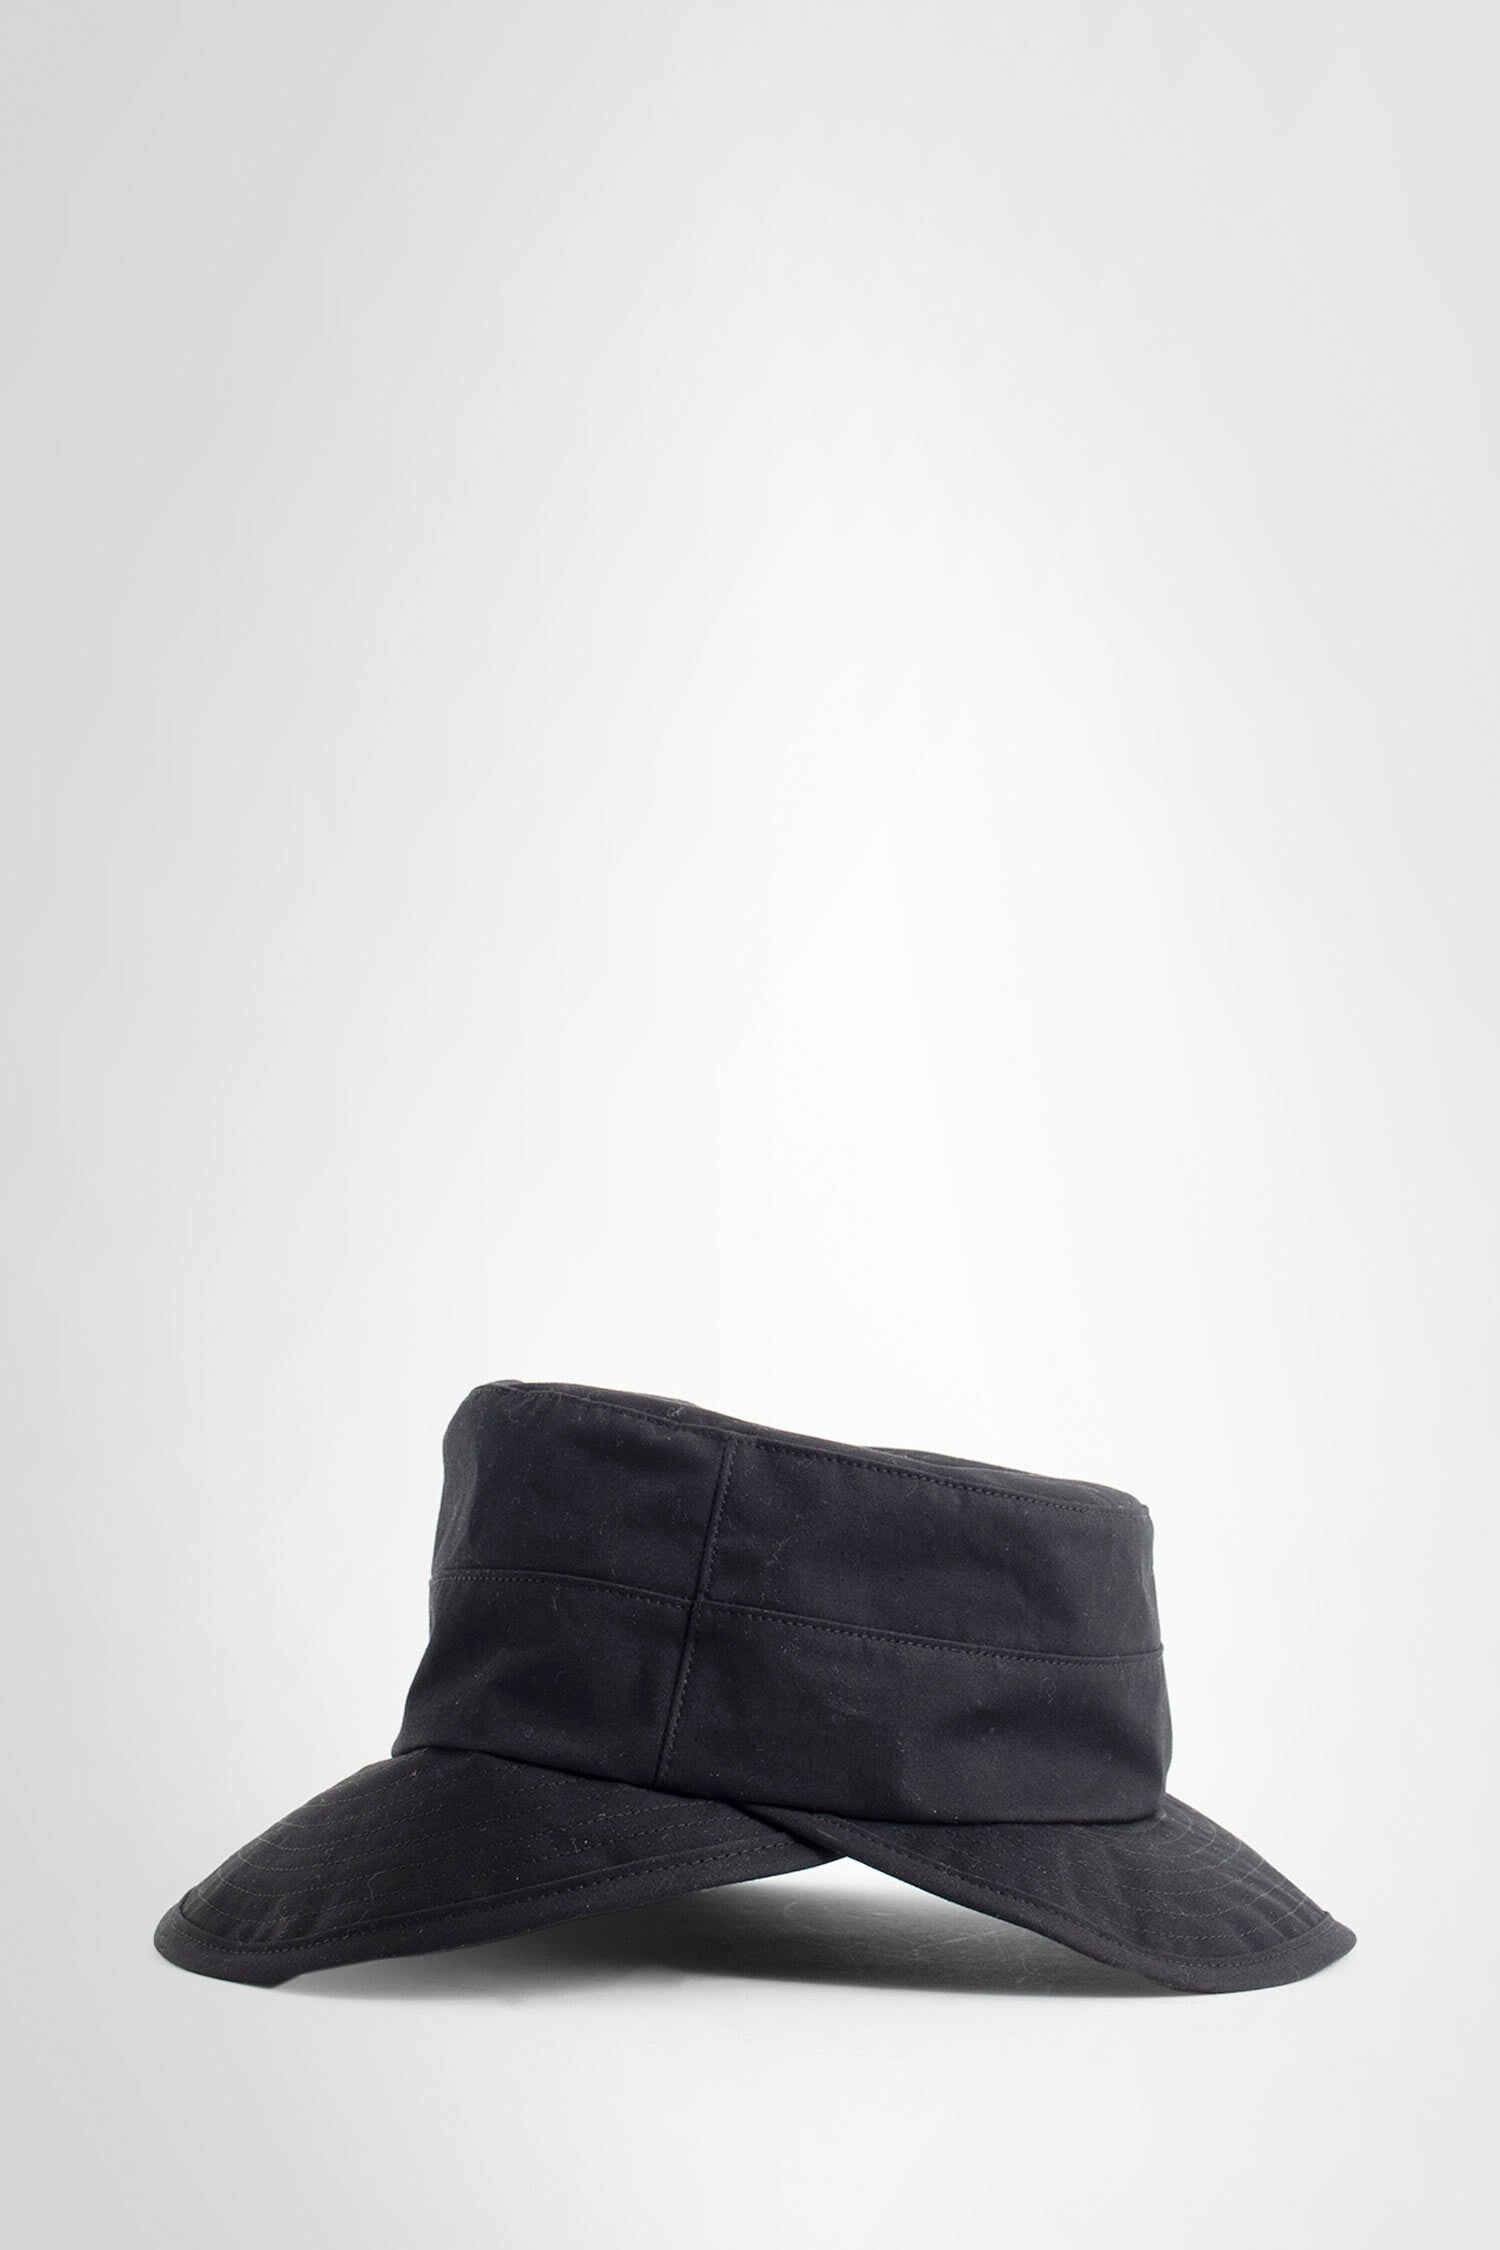 UNDERCOVER MAN BLACK HATS - 2